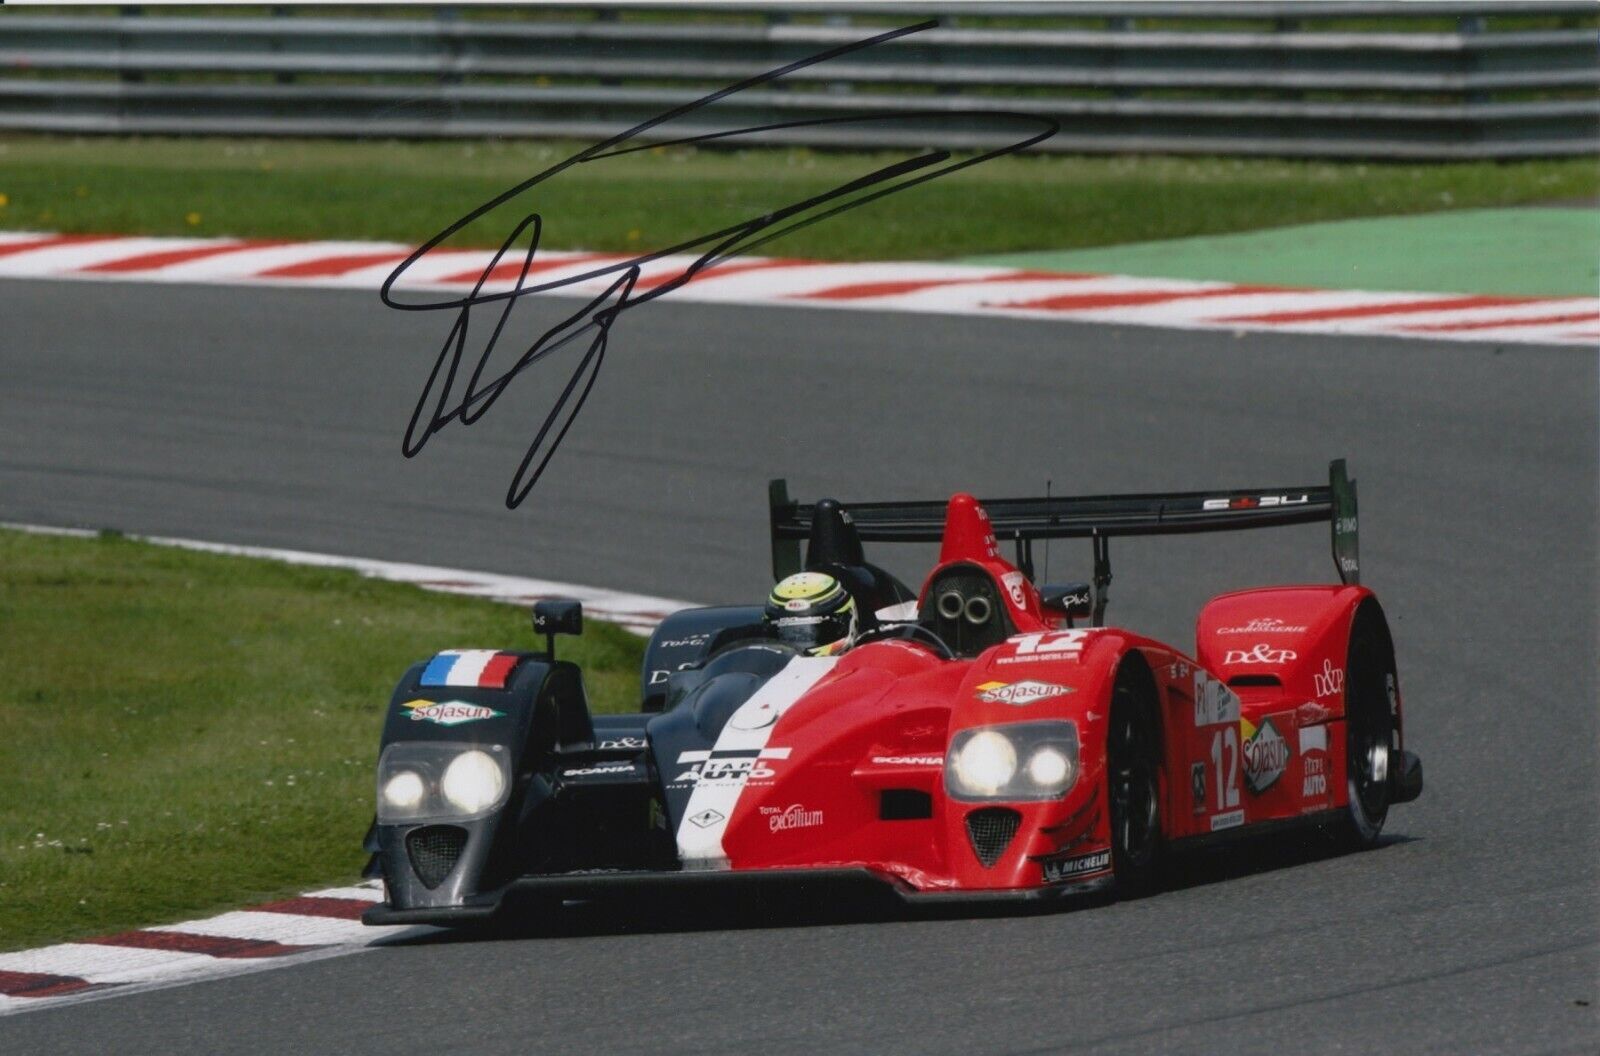 Pierre Ragues Hand Signed 9x6 Photo Poster painting - Le Mans Autograph 2.